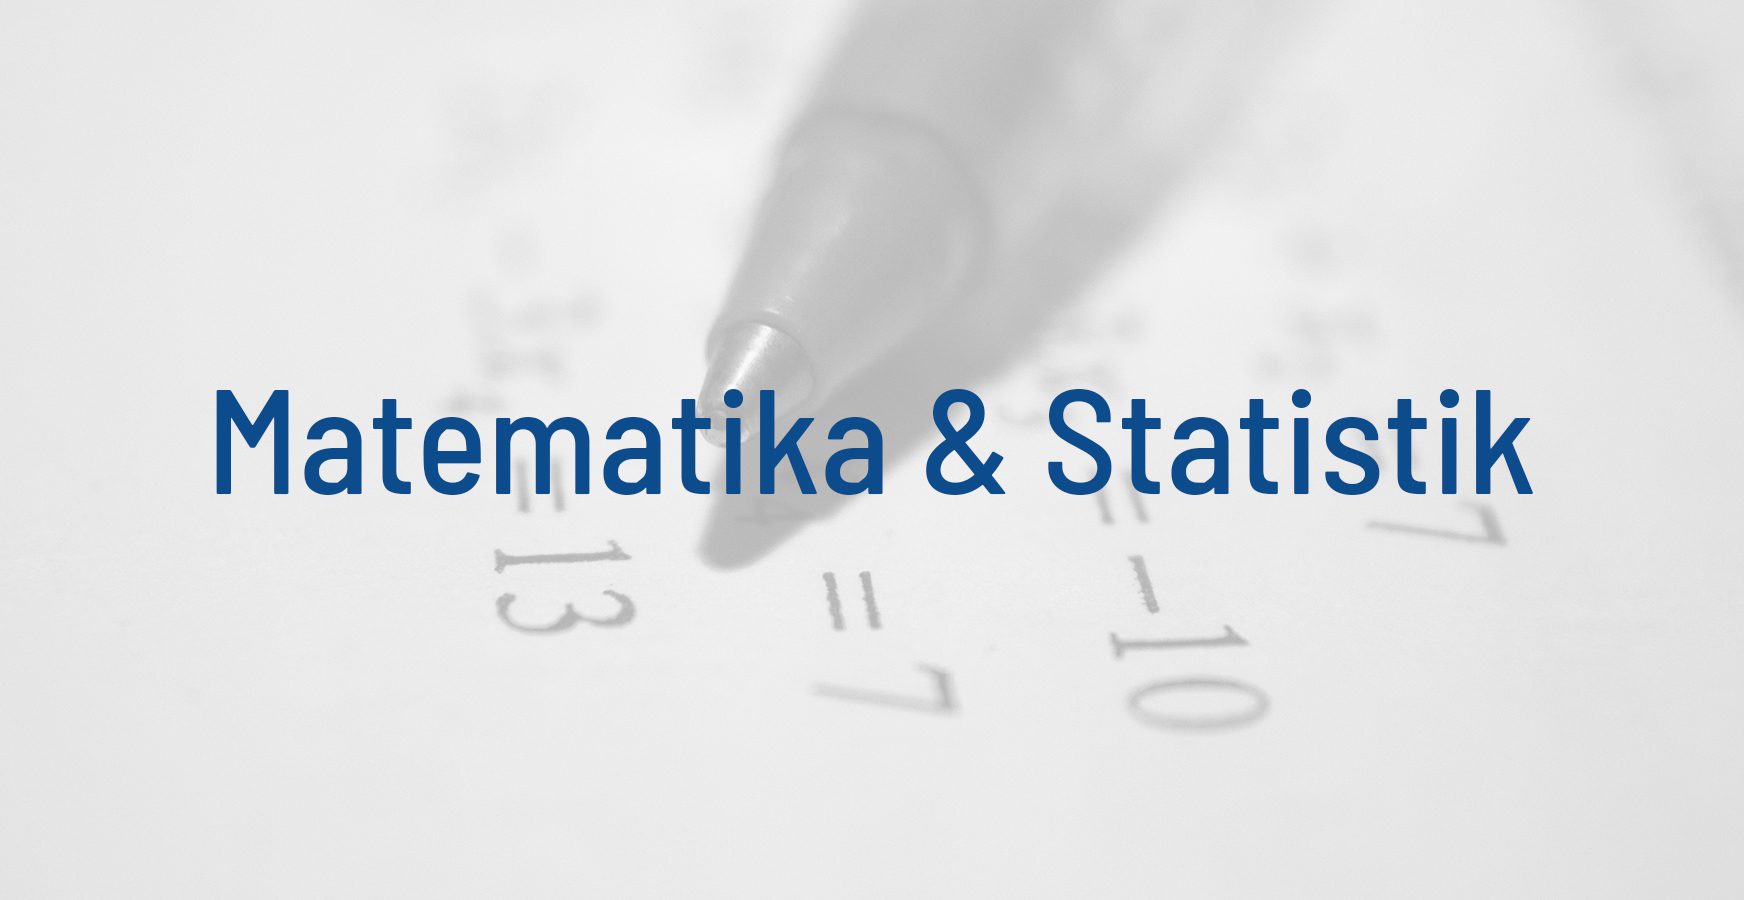 Matematika & Statistik